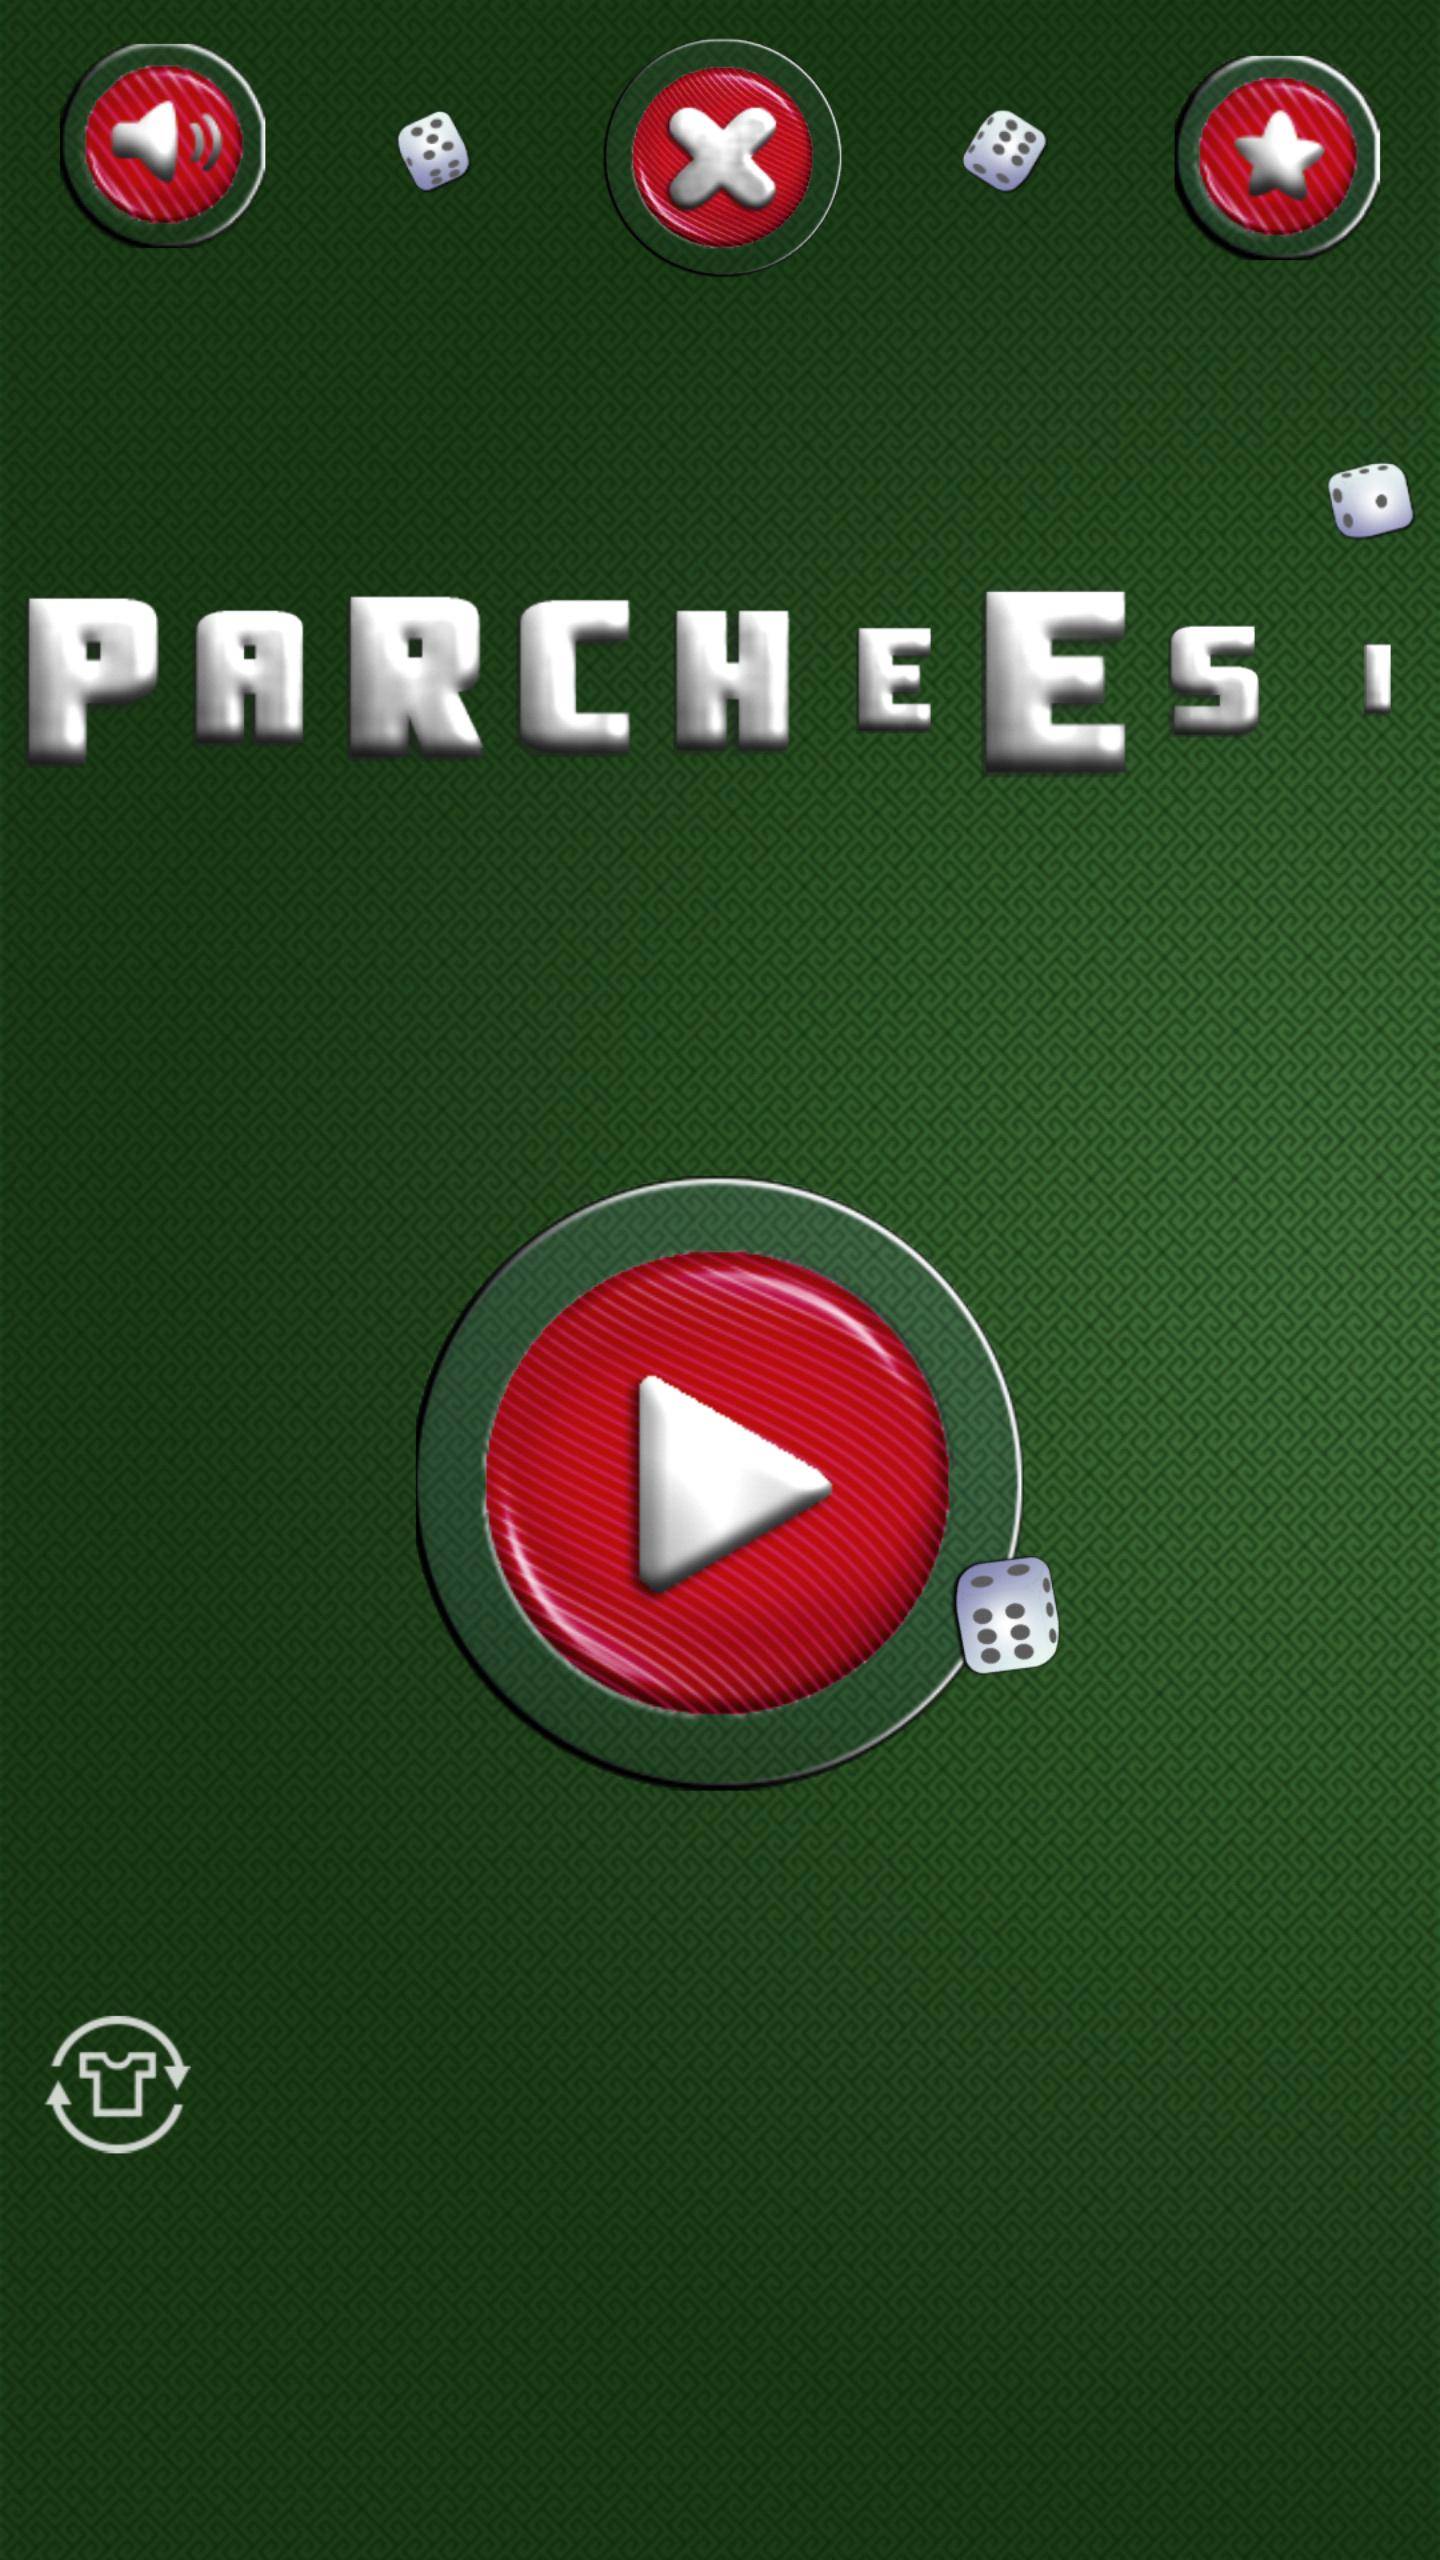 Parcheesi Board Game 2.2 Screenshot 2